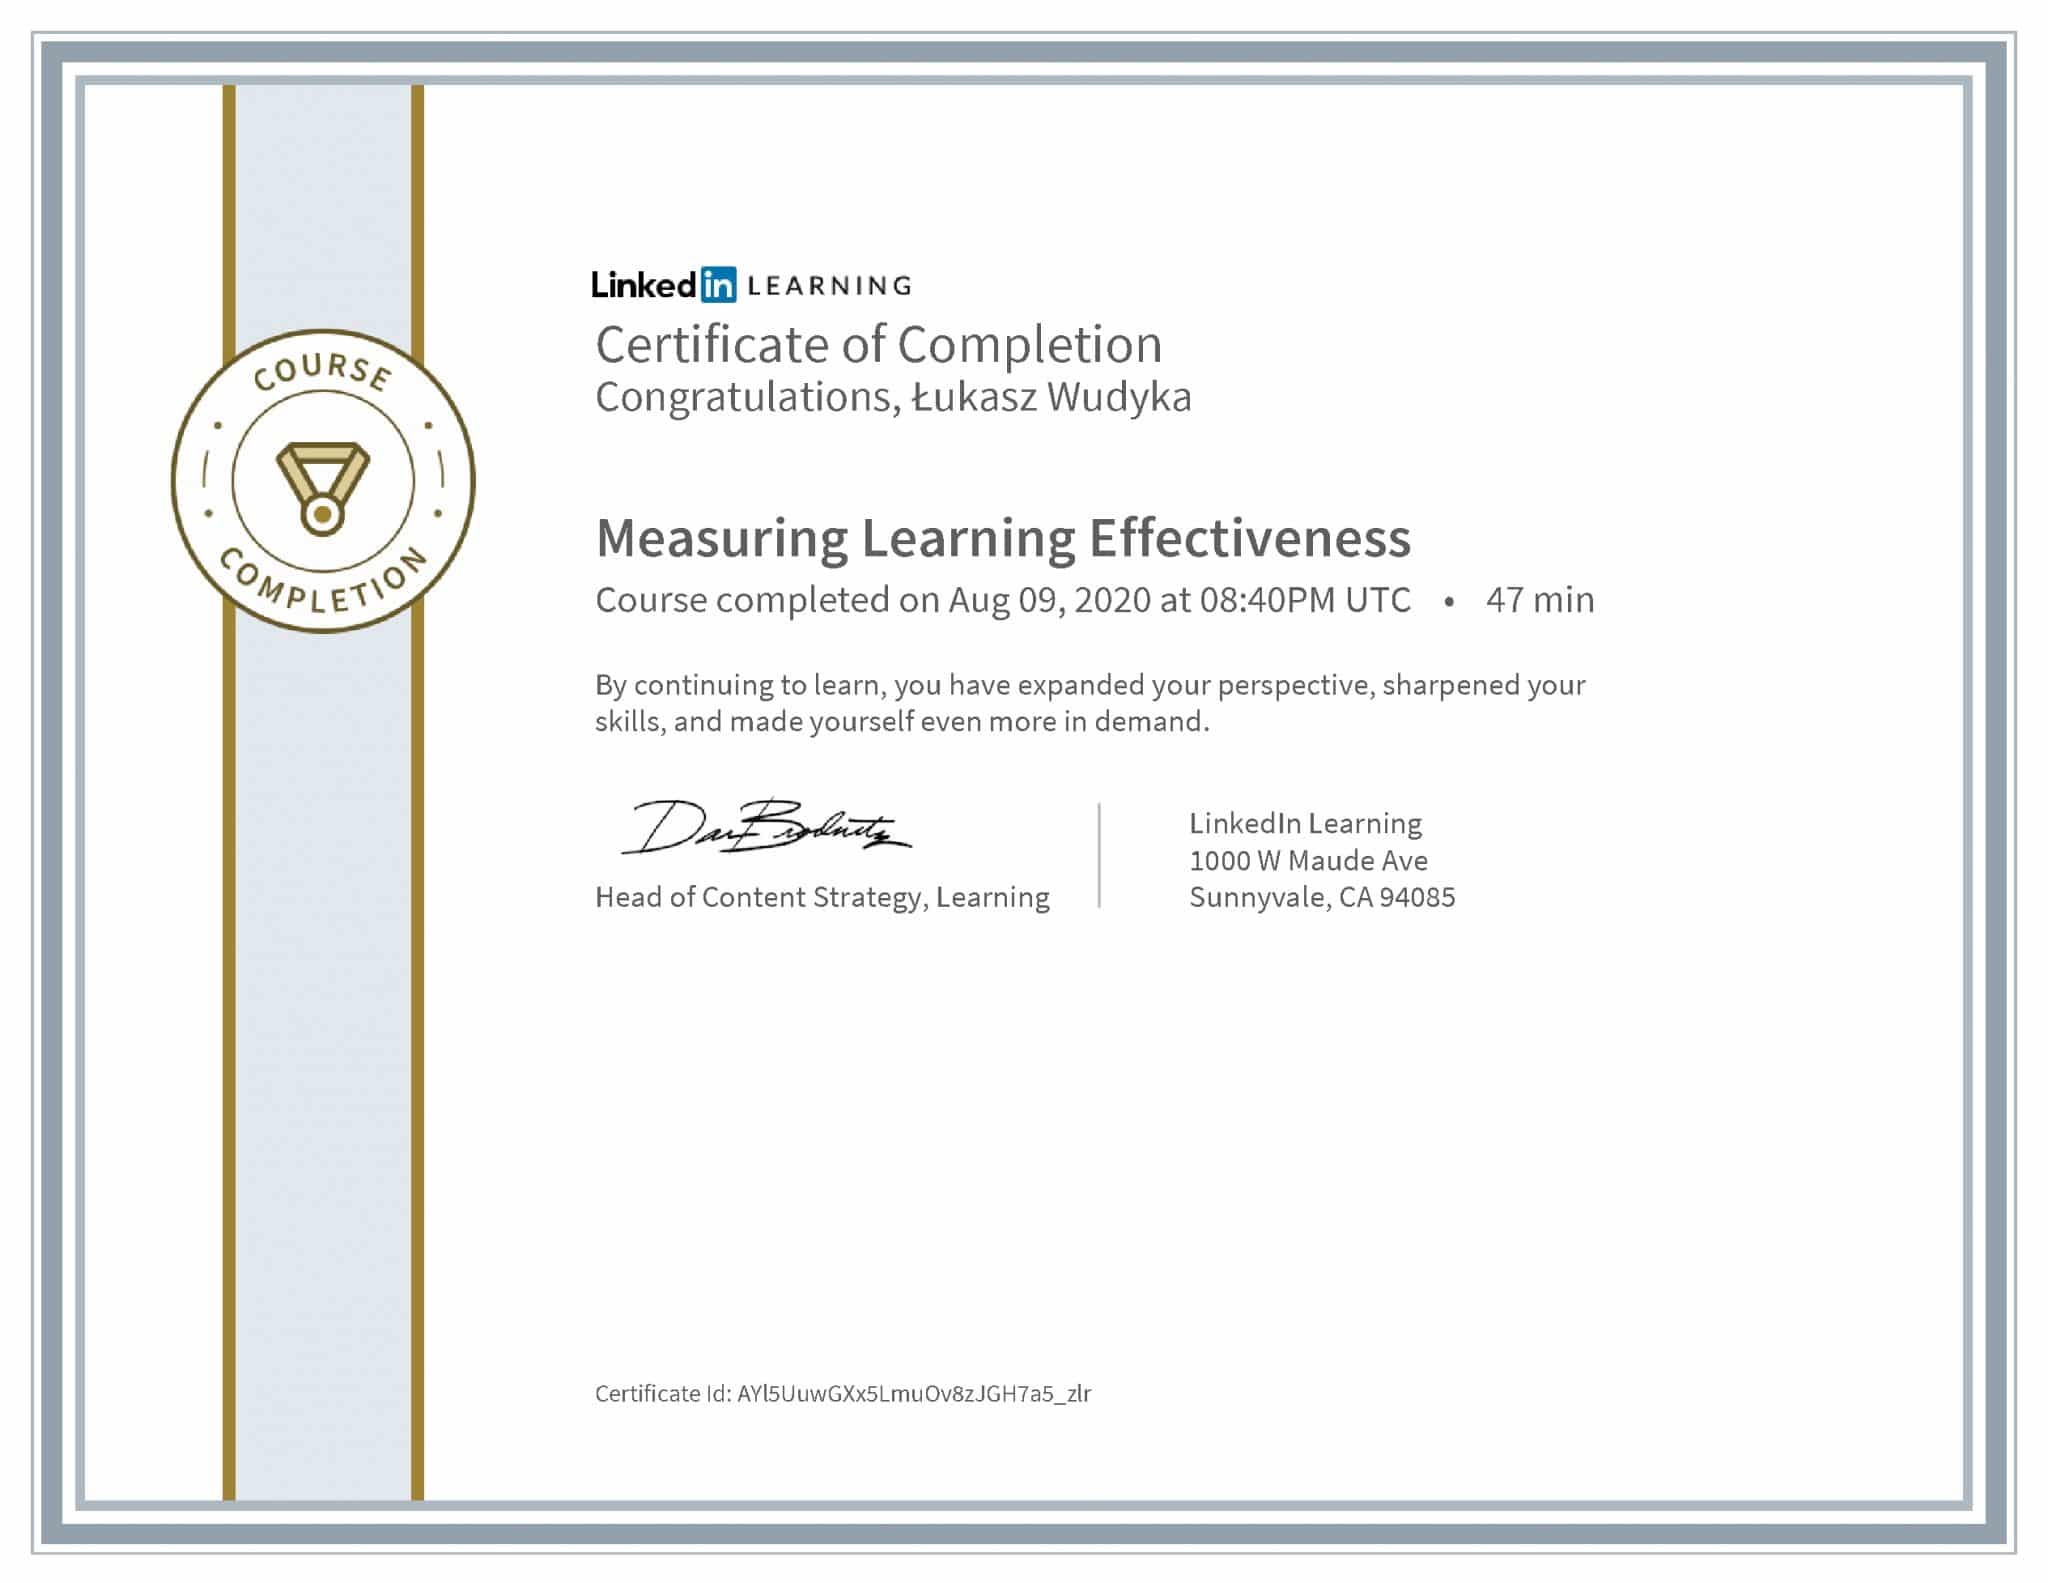 Łukasz Wudyka certyfikat LinkedIn Measuring Learning Effectiveness